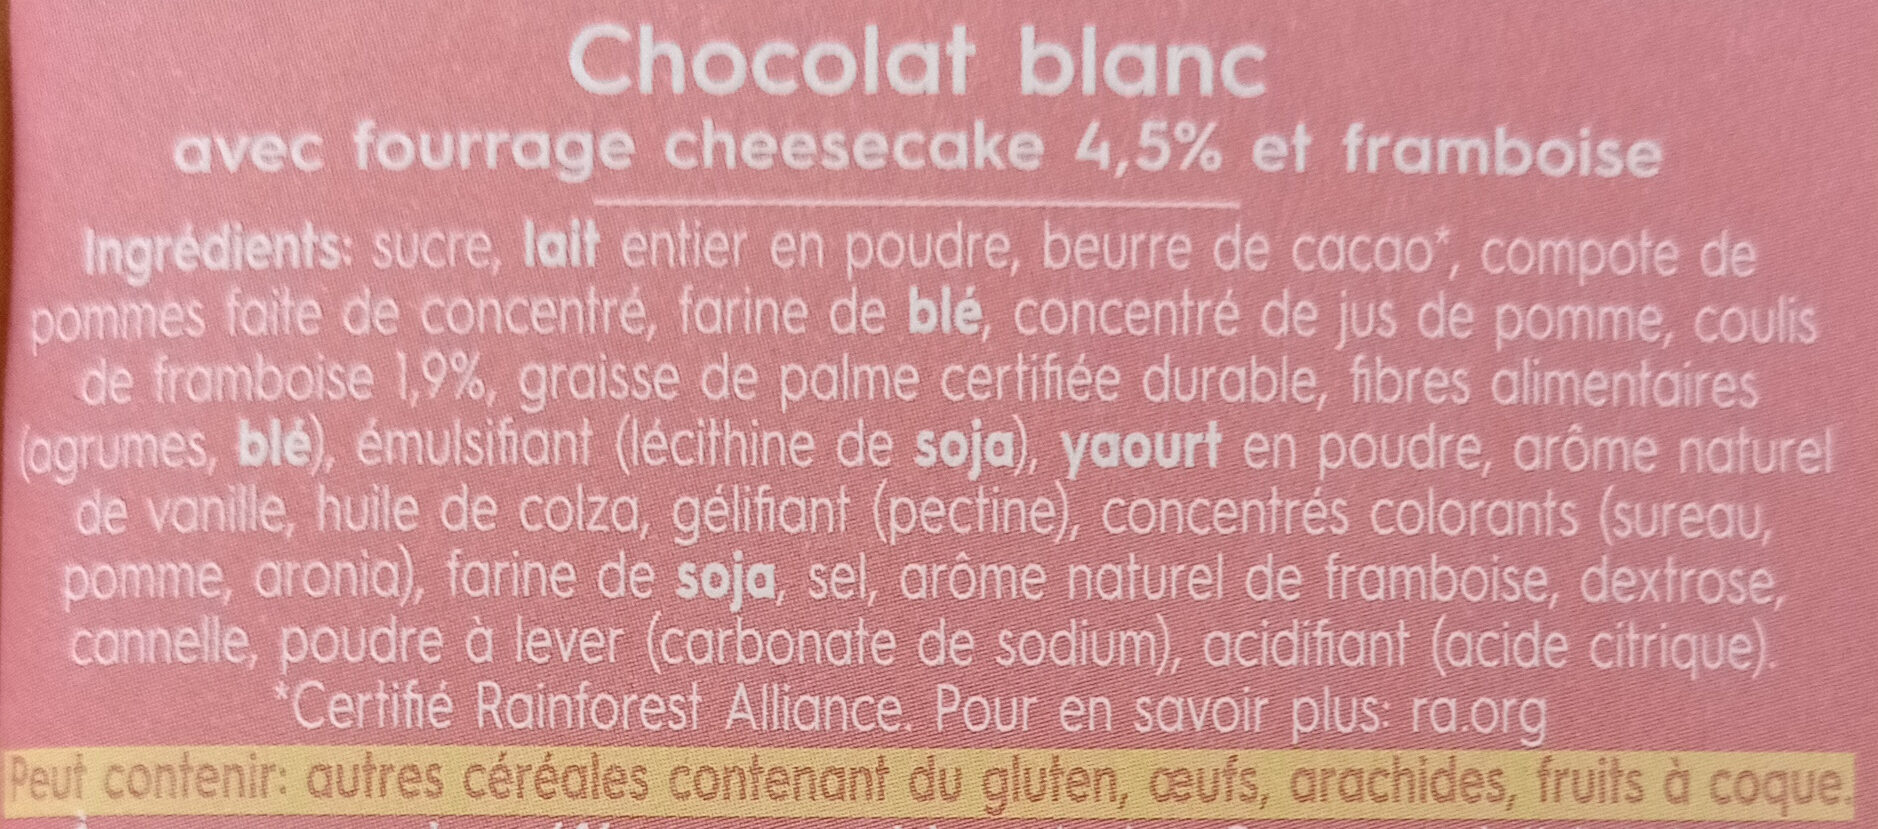 Chocolat blanc cheesecake framboise - Ingrédients